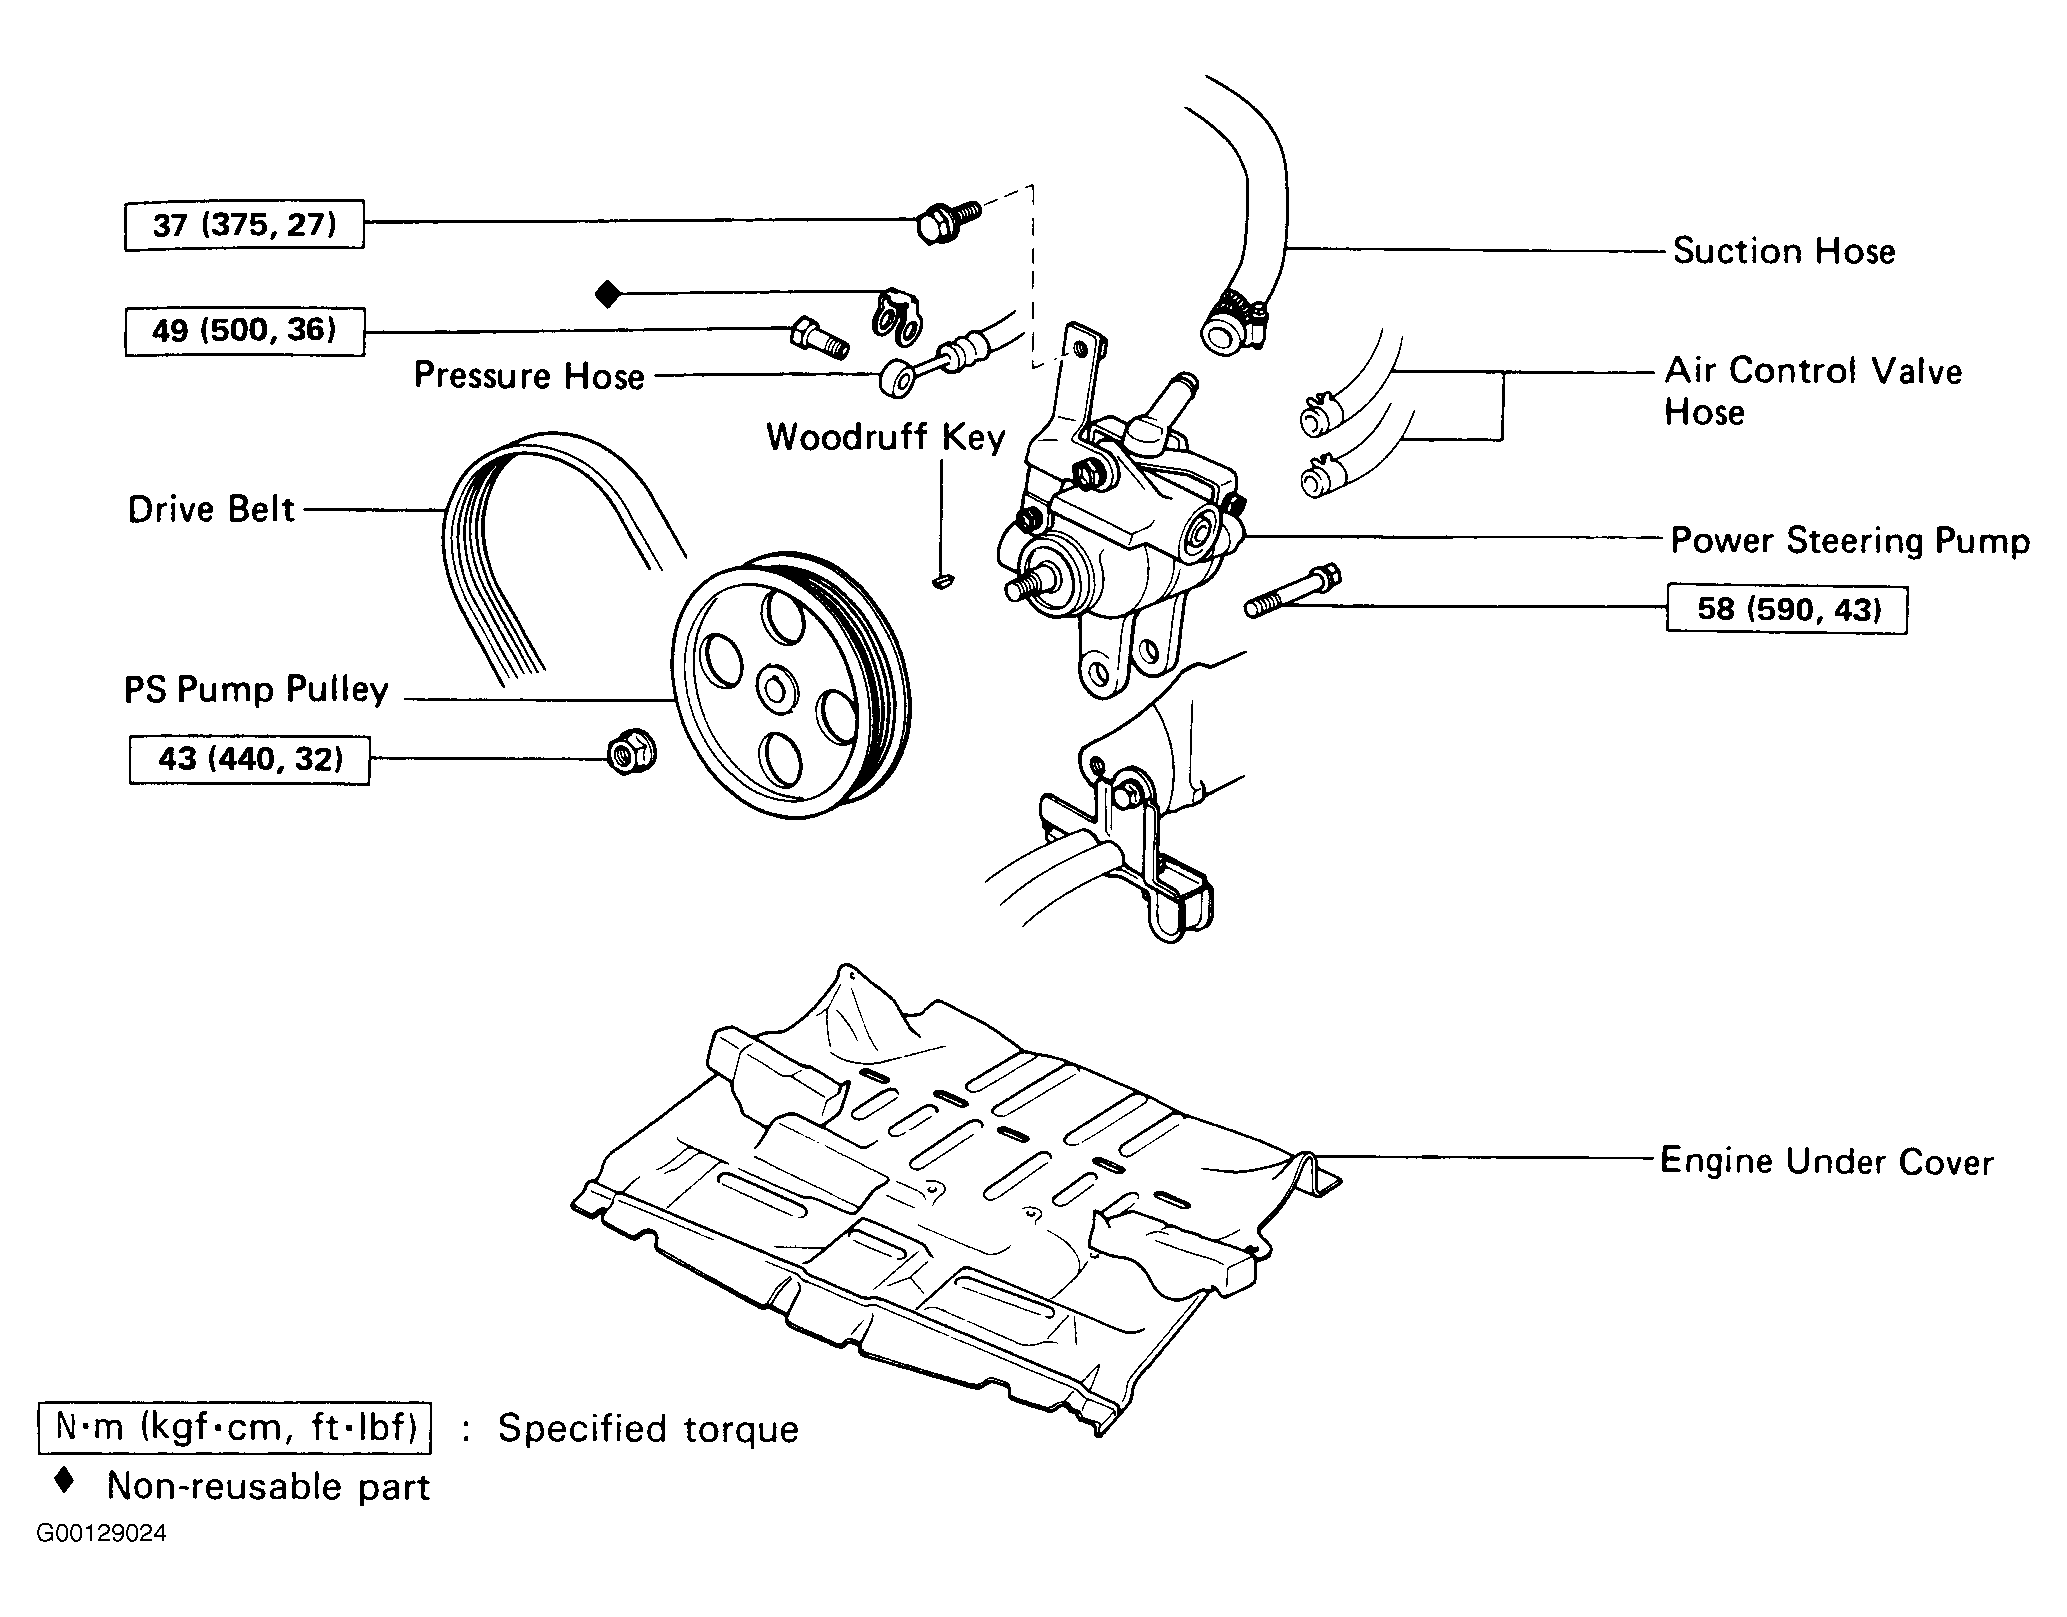 2004 chrysler pacifica 3.5 serpentine belt diagram